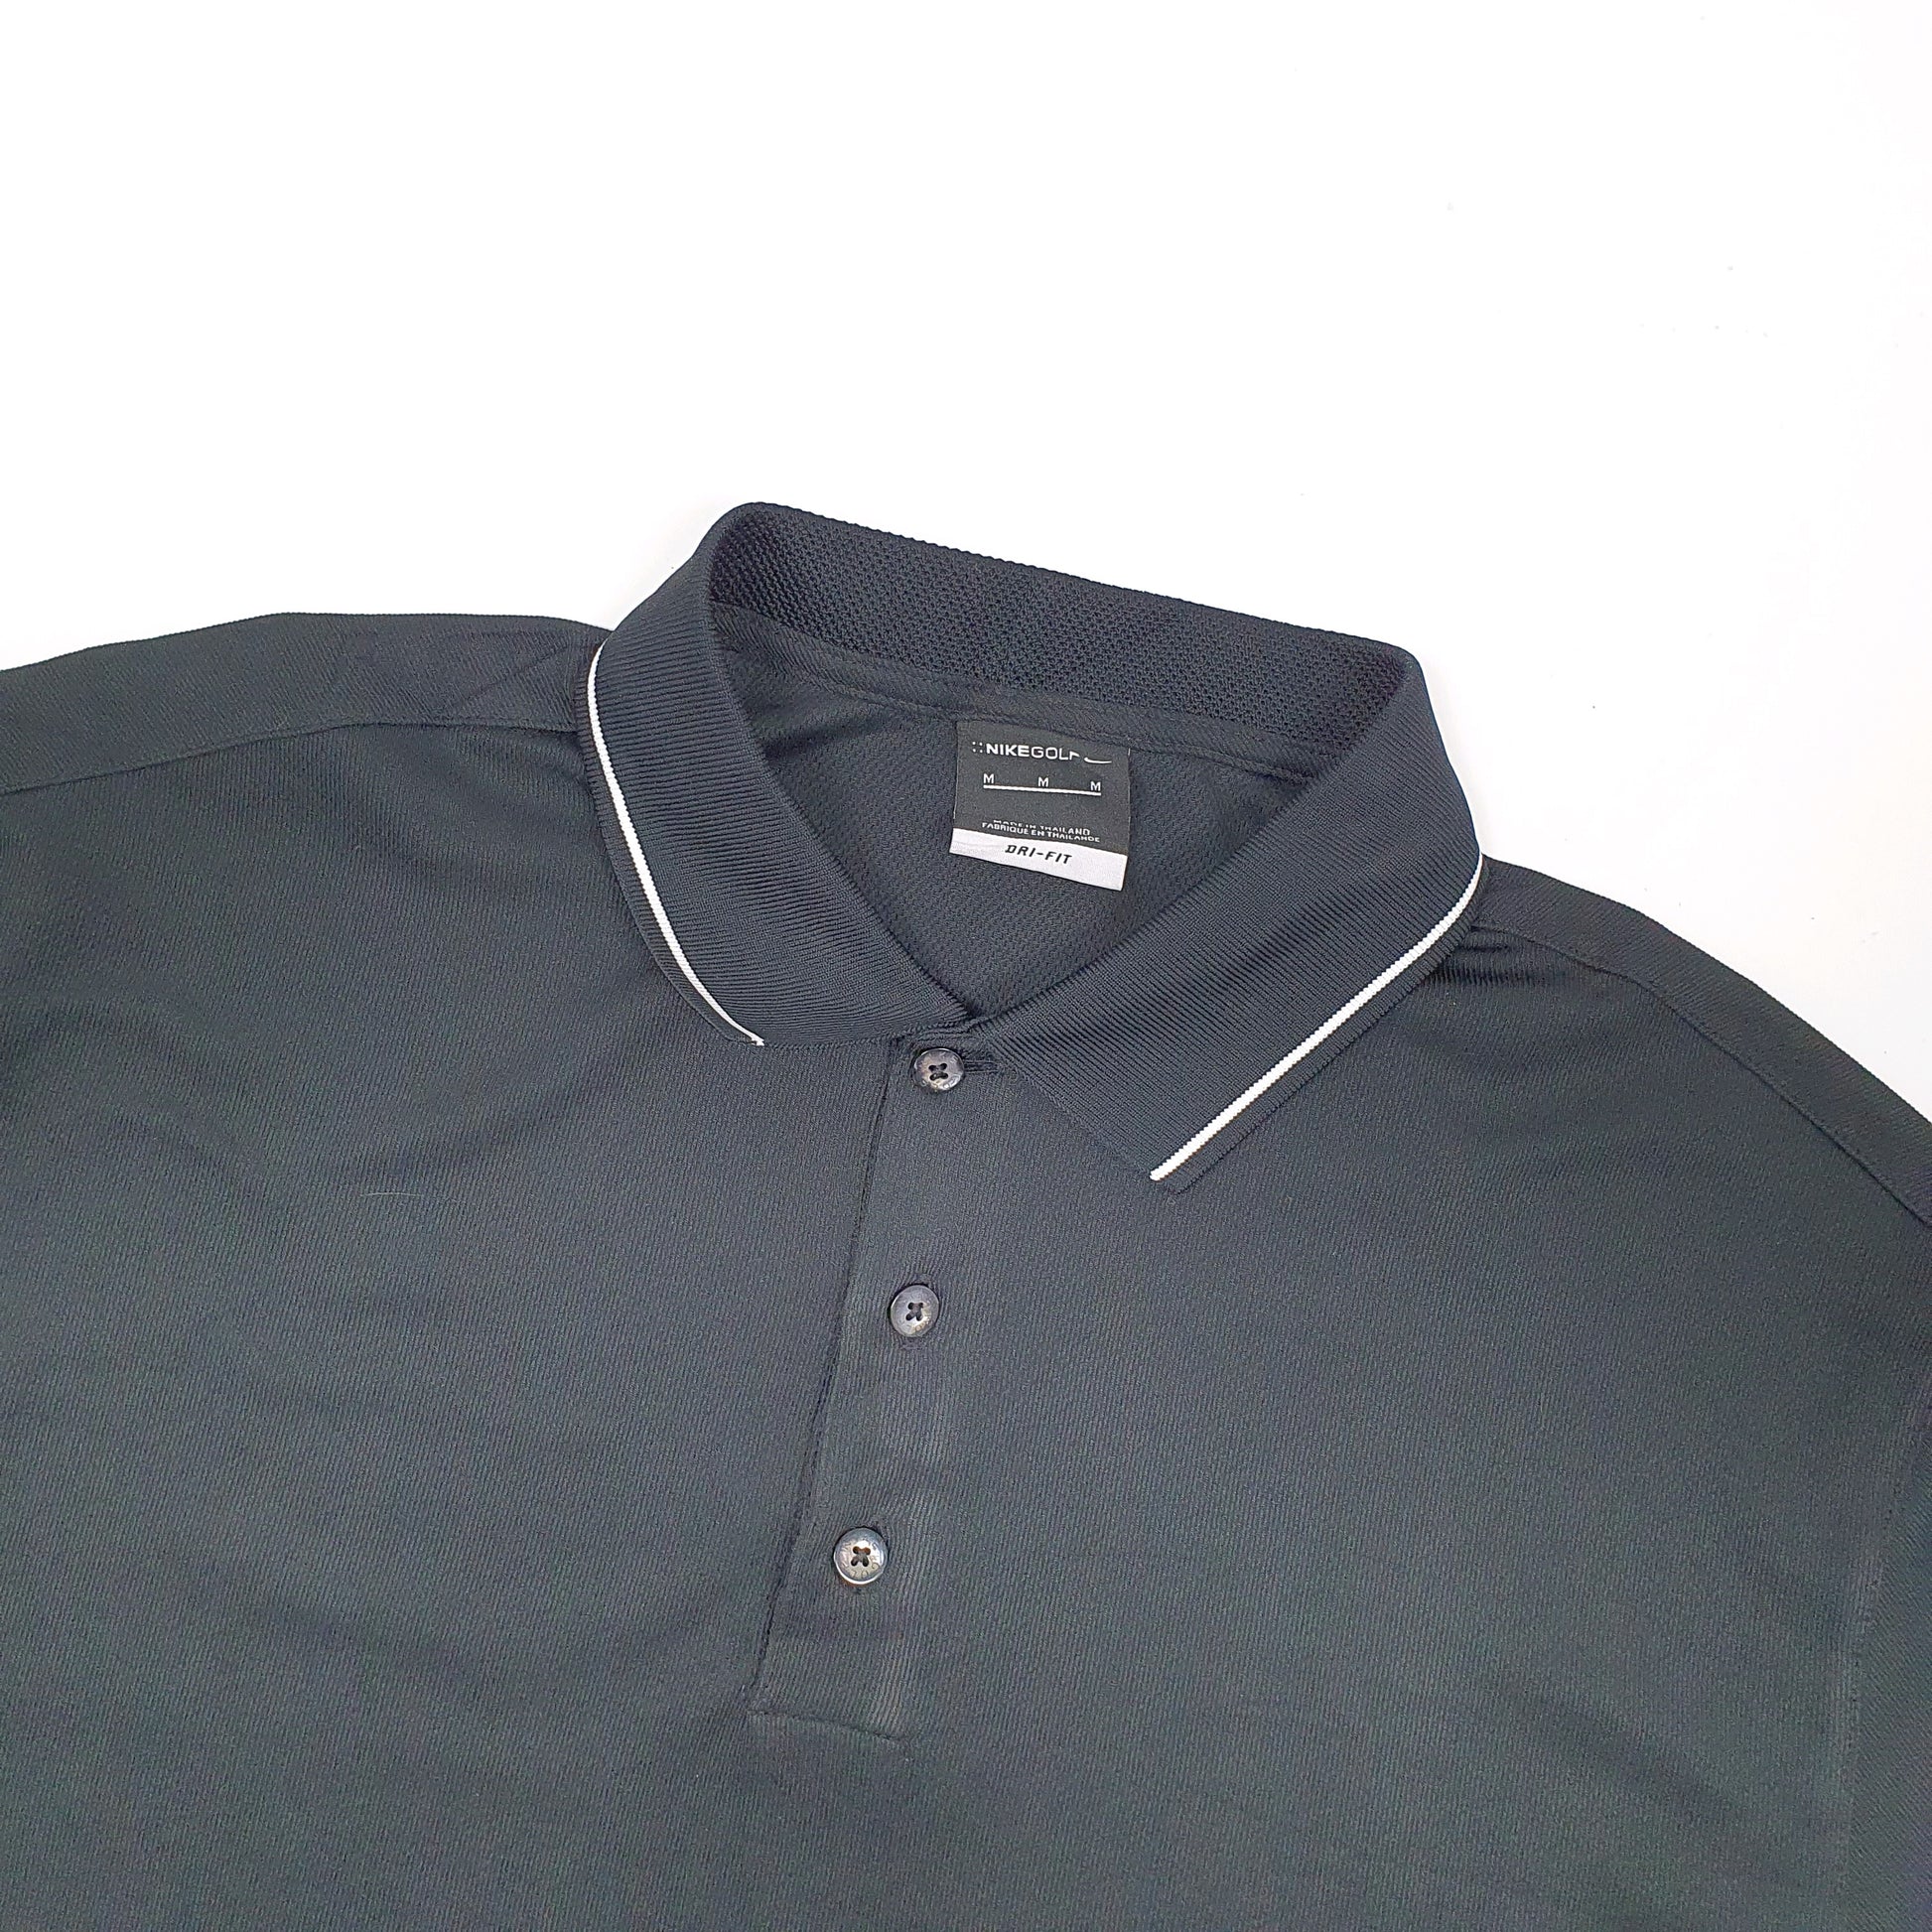 Nike Golf Dri Fit Short Sleeve Polo Shirt Black